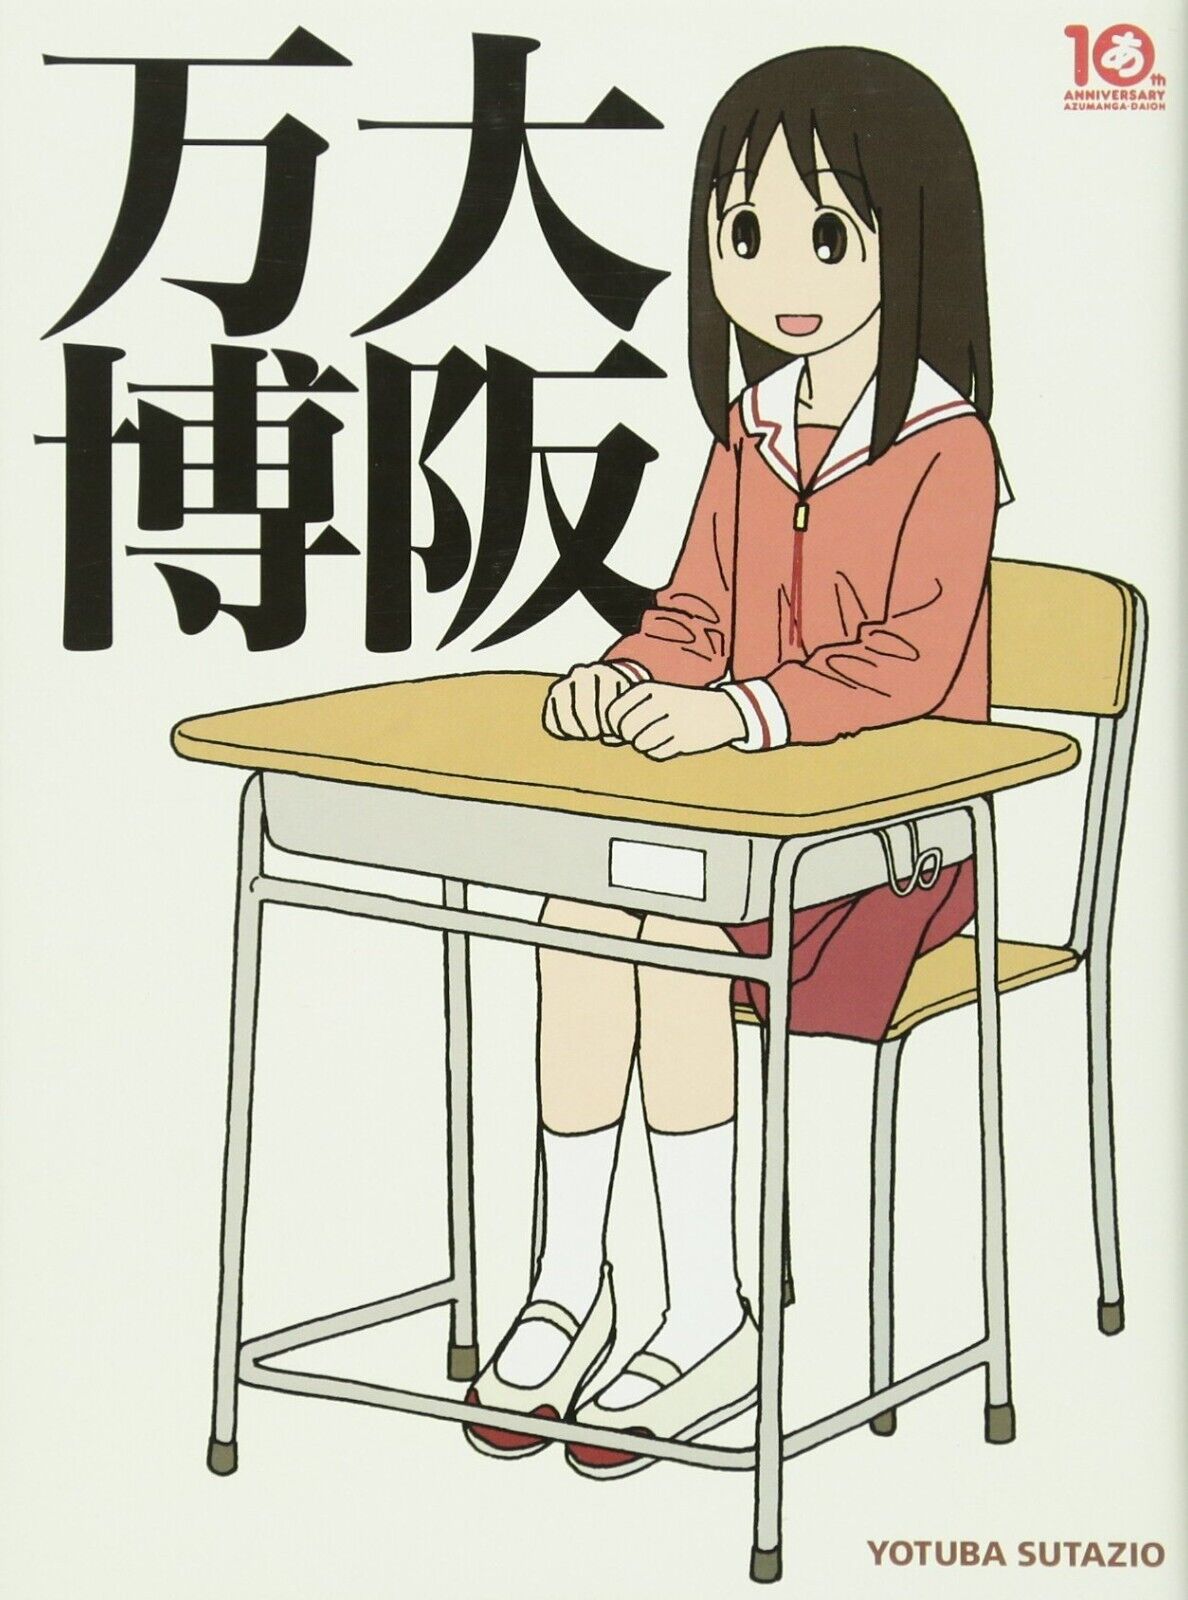 Osaka Banpaku Kiyohiko Azuma (Azumanga Daioh 10 Year Anniversary Book) JAPAN 